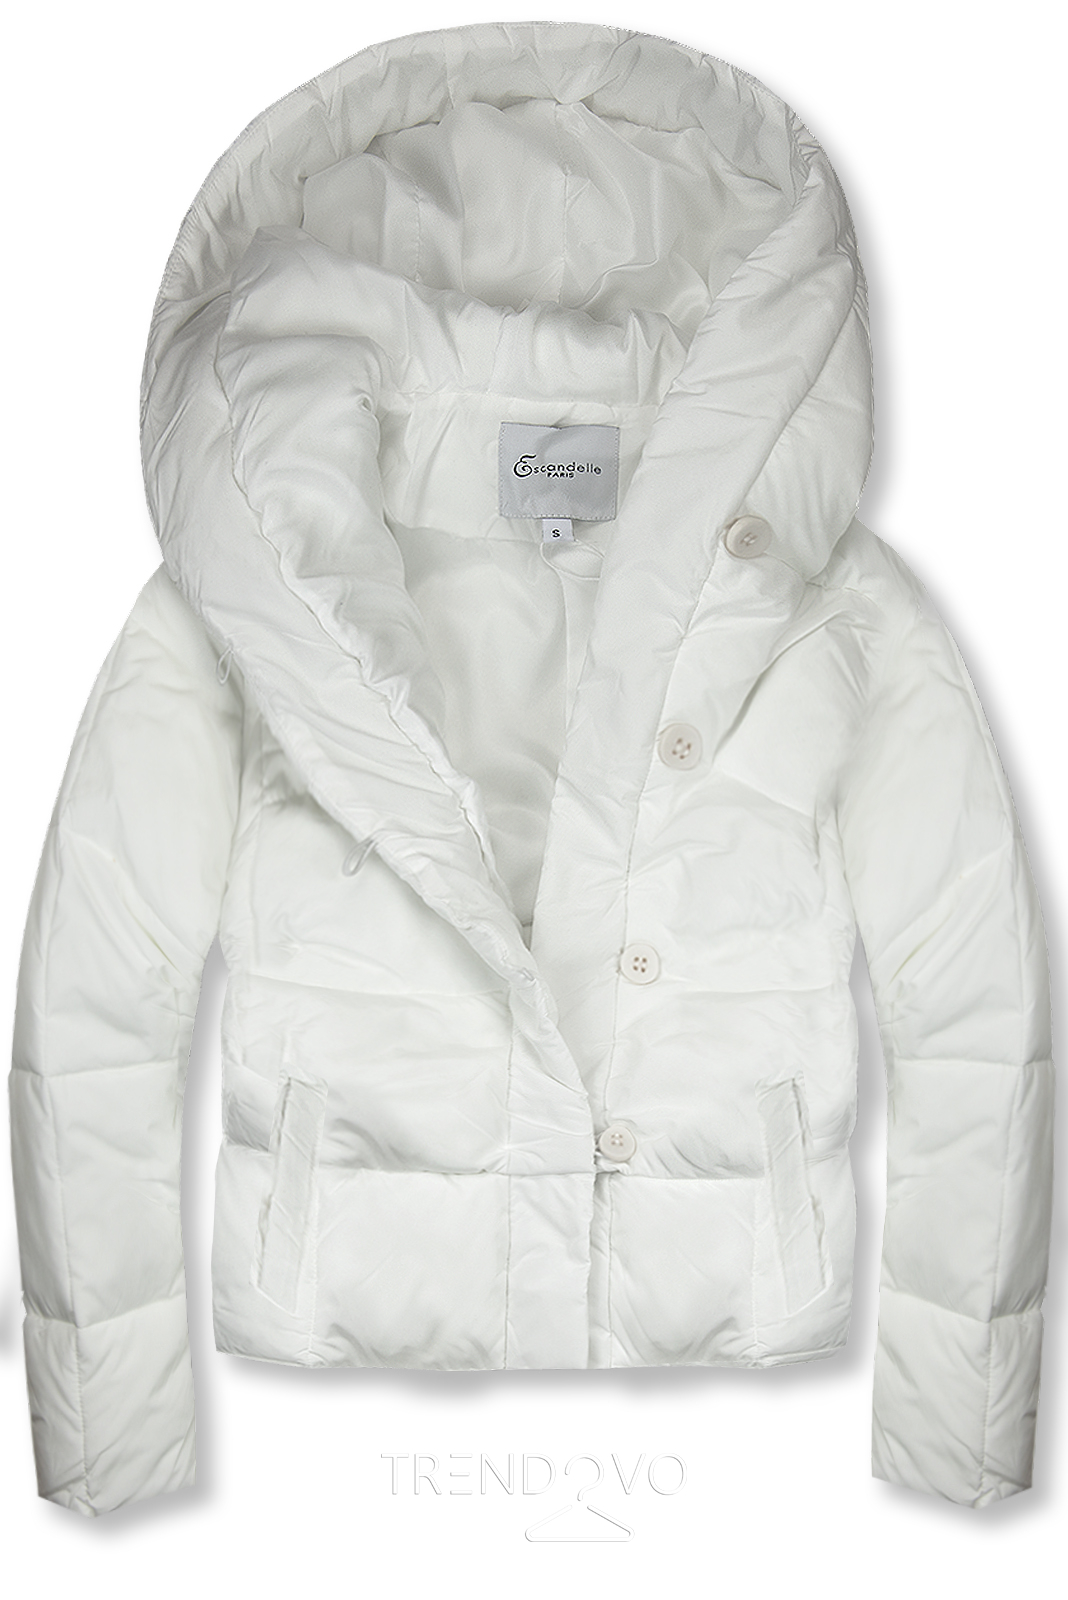 Biela zimná bunda 2 v 1